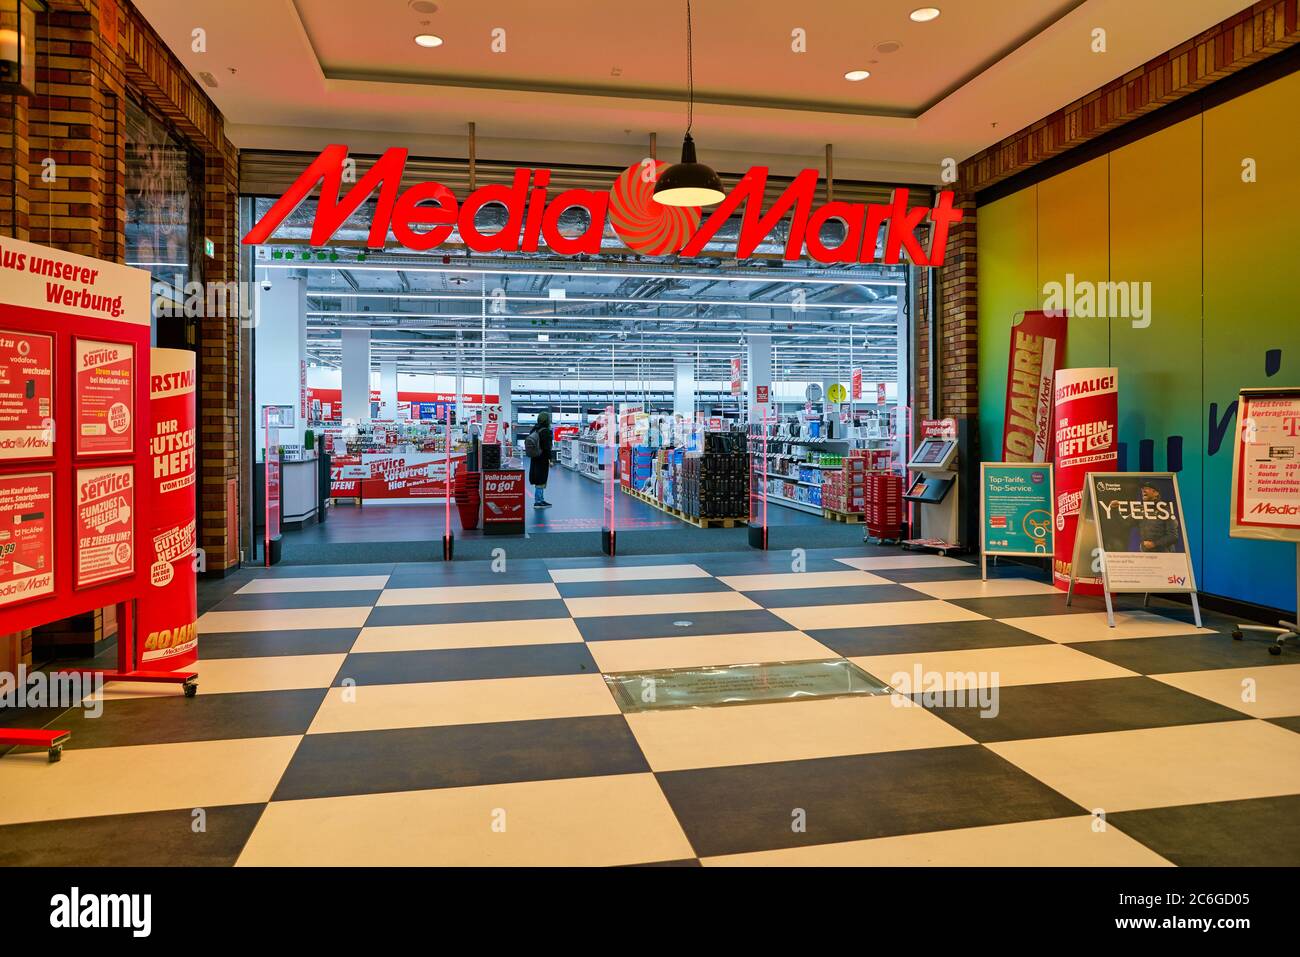 Entry Media Markt Store Brussels Belgium Stock Photo 1335506867